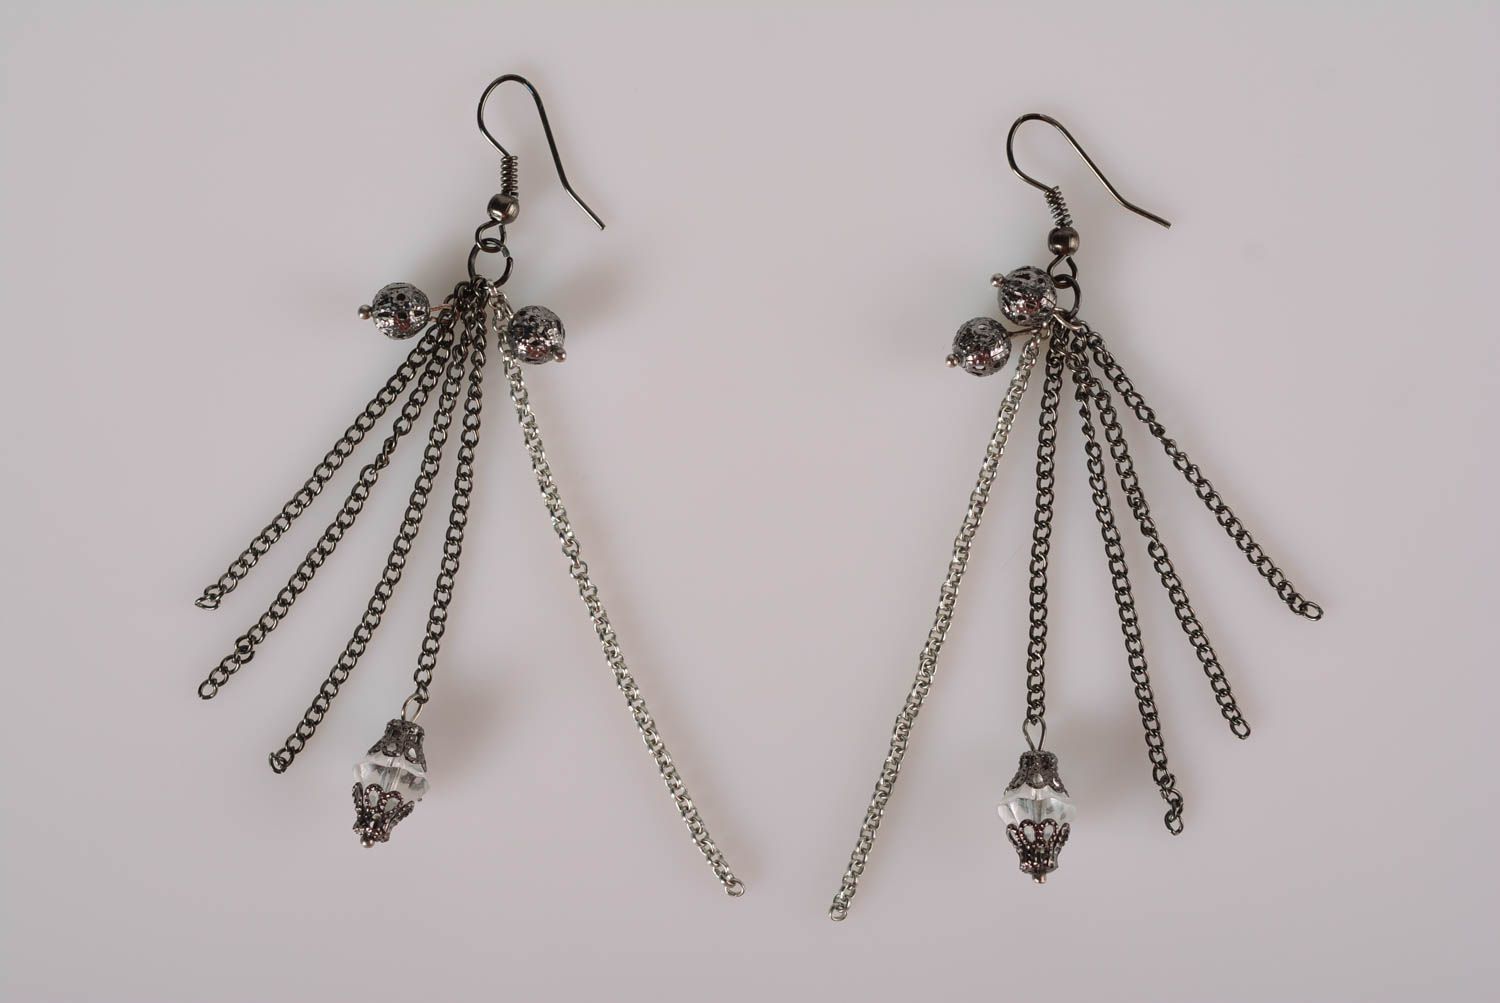 Metal jewelry handmade earrings dangling earrings women accessories cool gifts photo 1